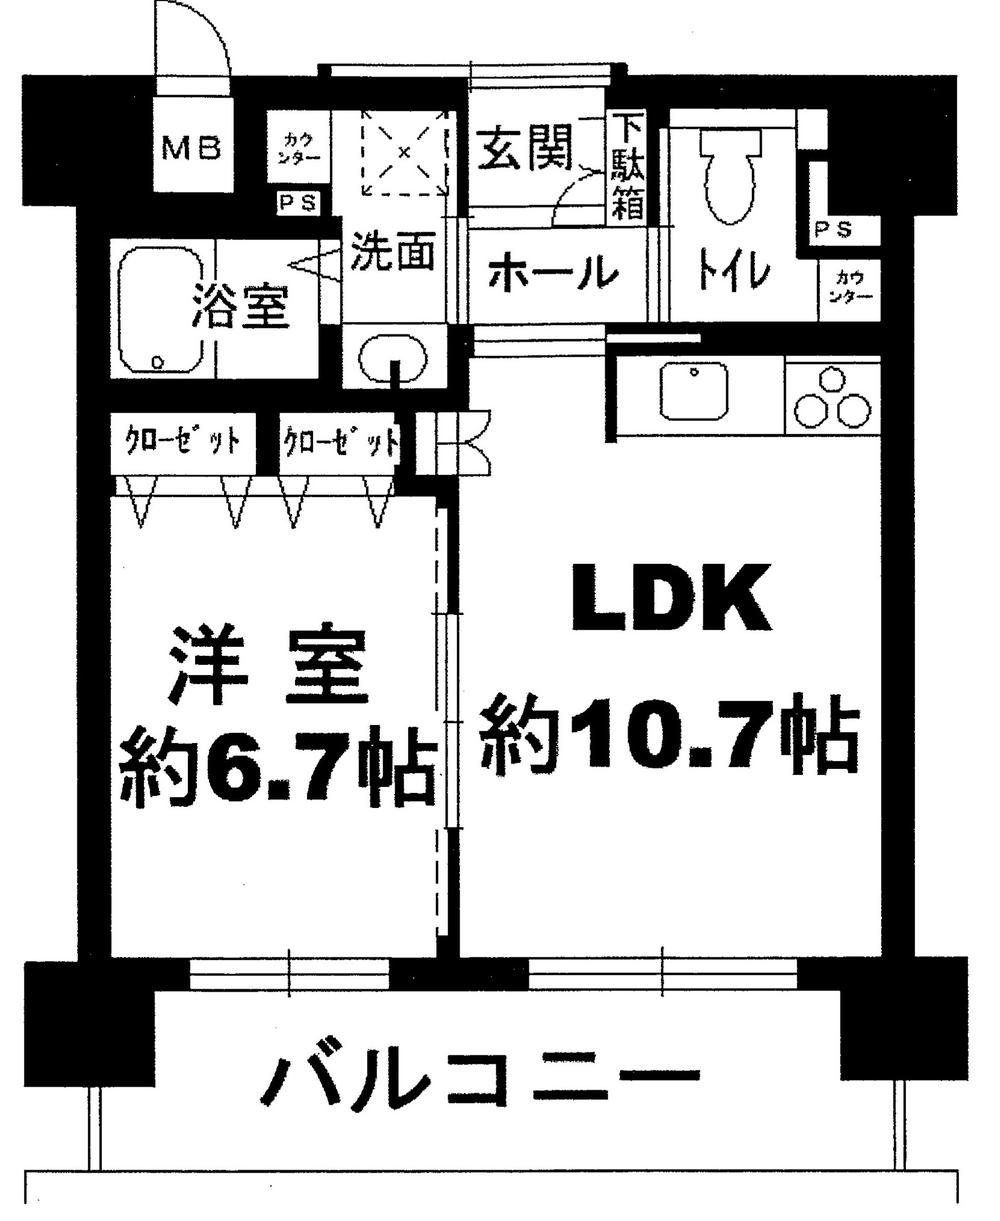 Floor plan. 2LDK, Price 7.5 million yen, Footprint 44.1 sq m , Balcony area 11.34 sq m